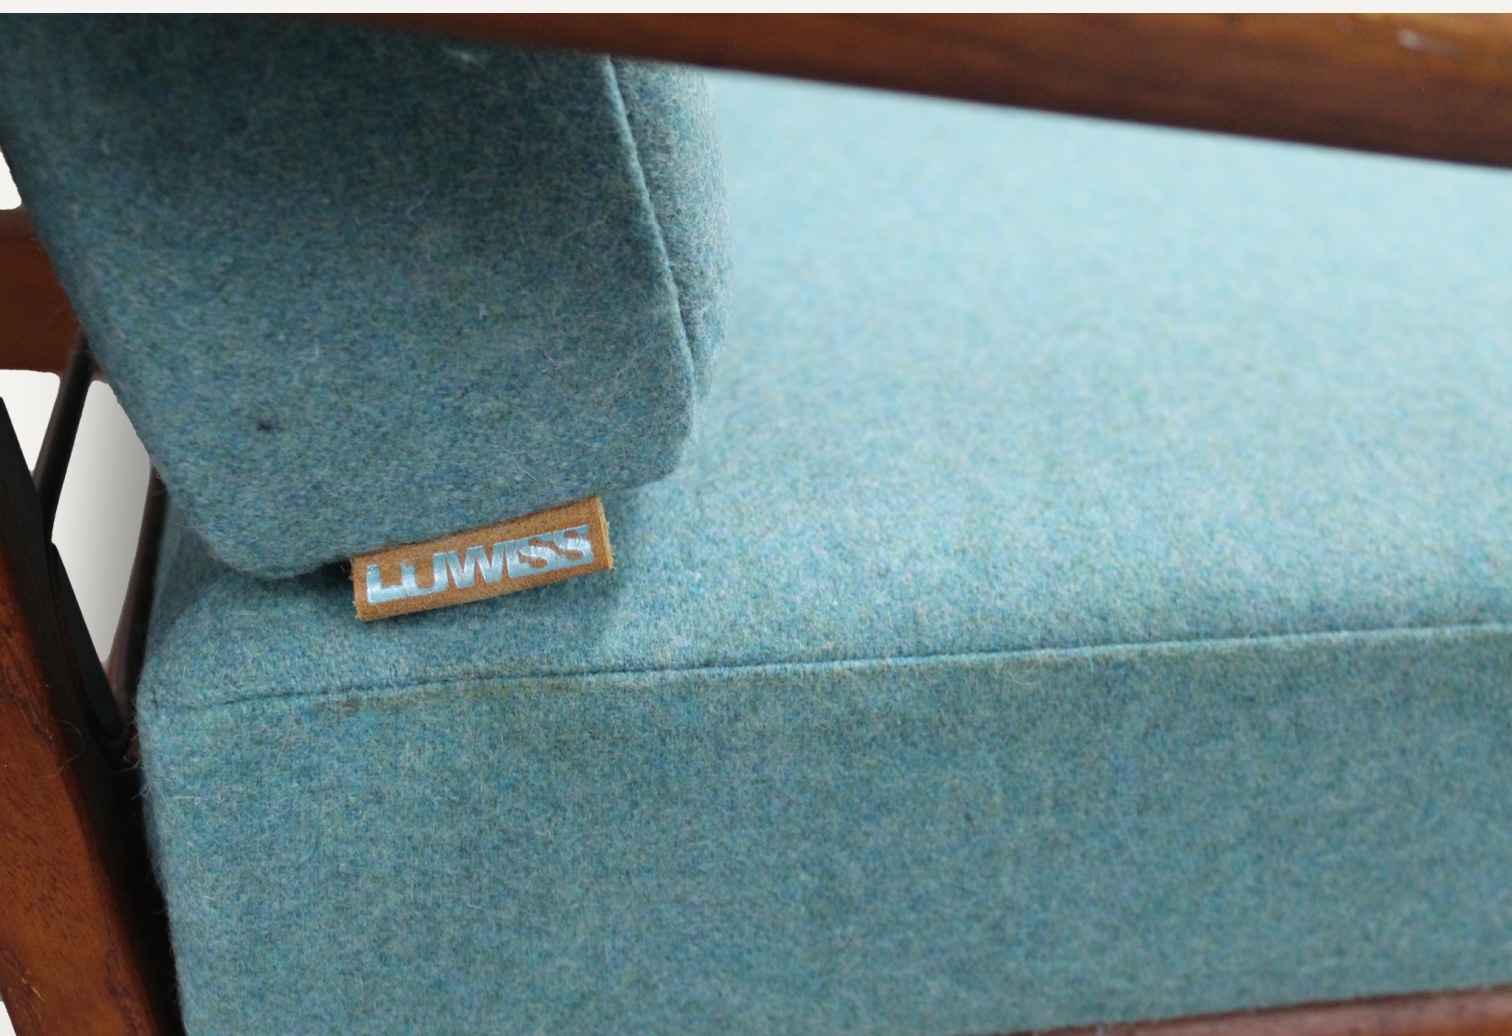 reupholstery danish mid century armchair tag logo Luwiss